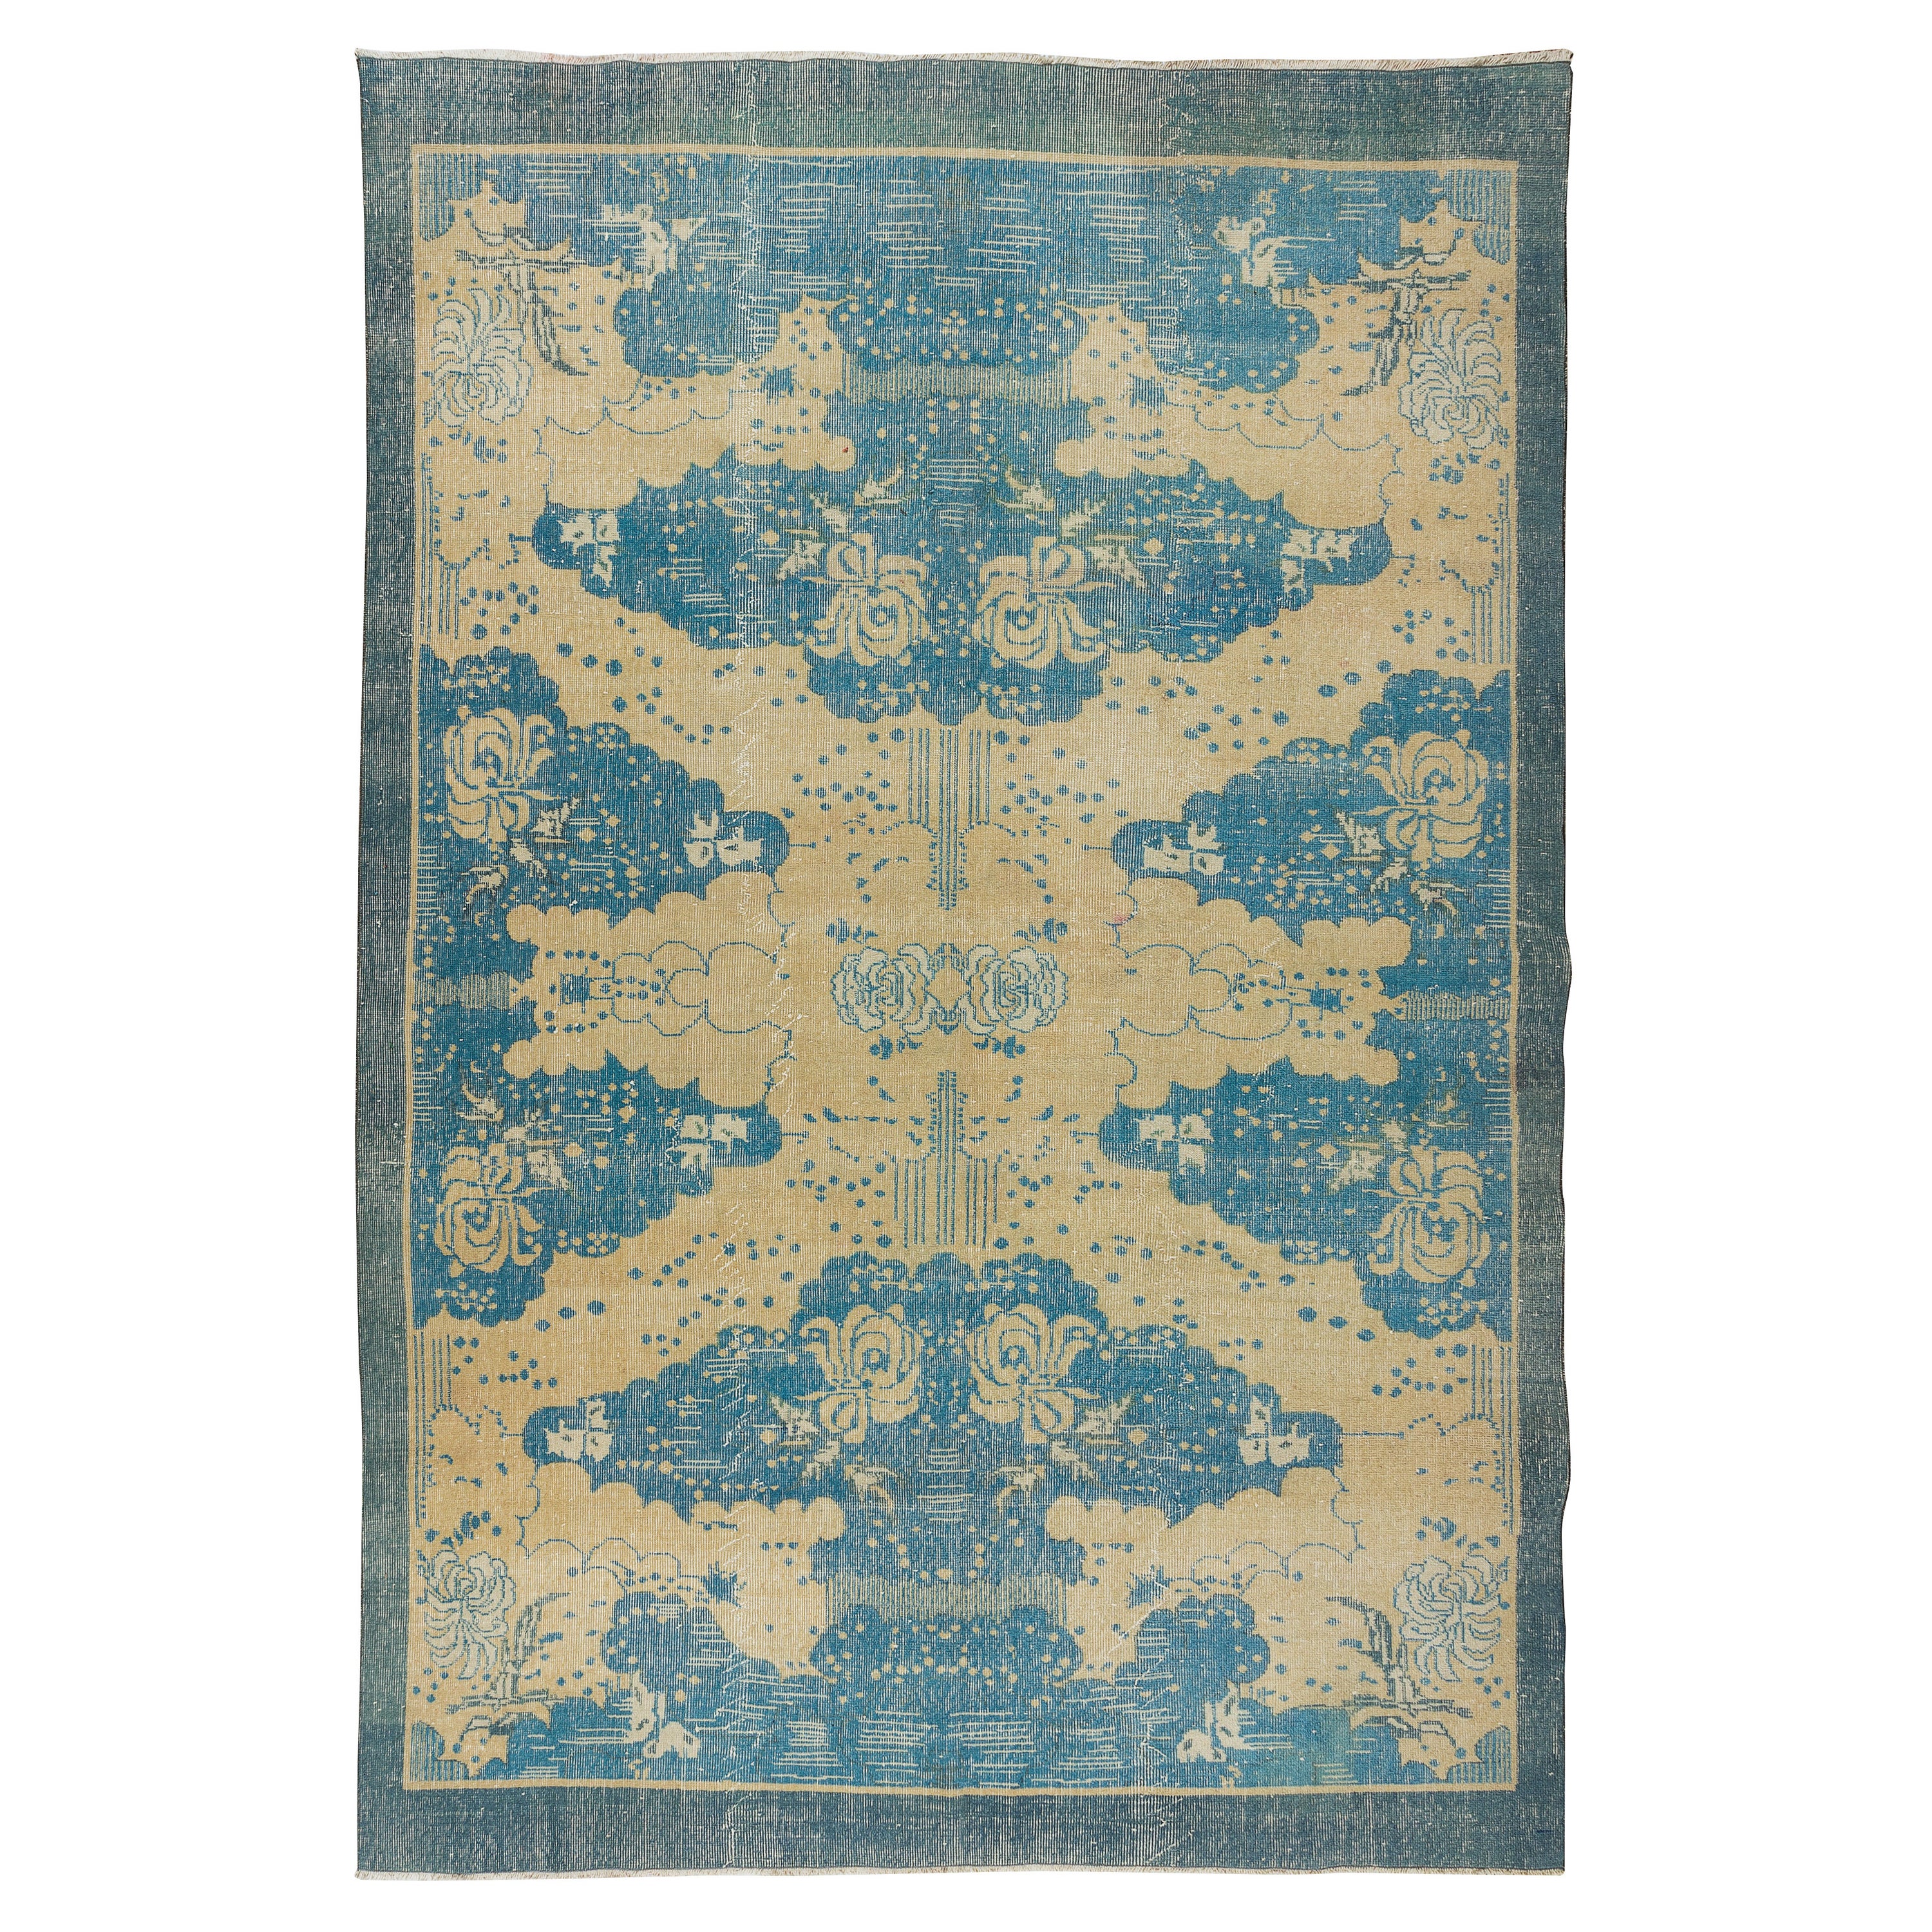 7x10.2 Ft Vintage Turkish Area Rug, Handmade Woolen Carpet in Beige and Blue For Sale